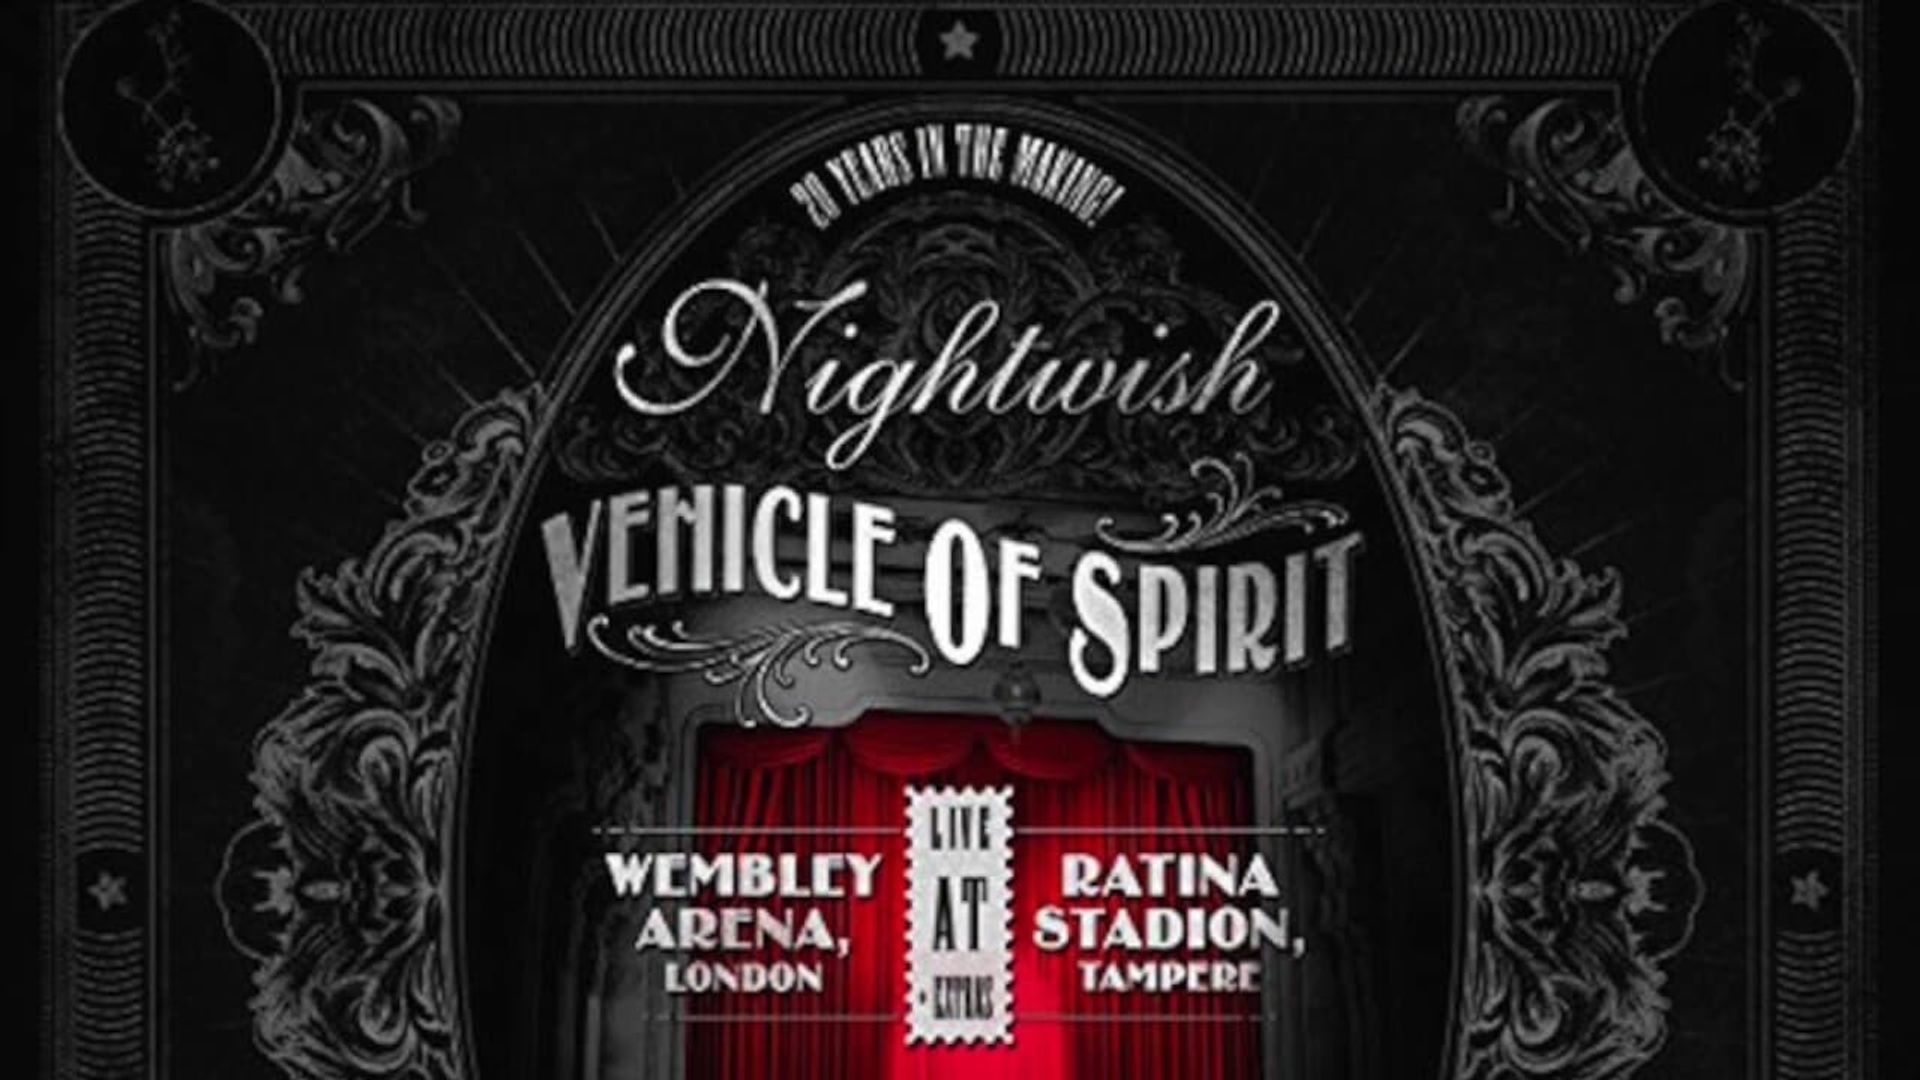 Nightwish: Vehicle of Spirit background